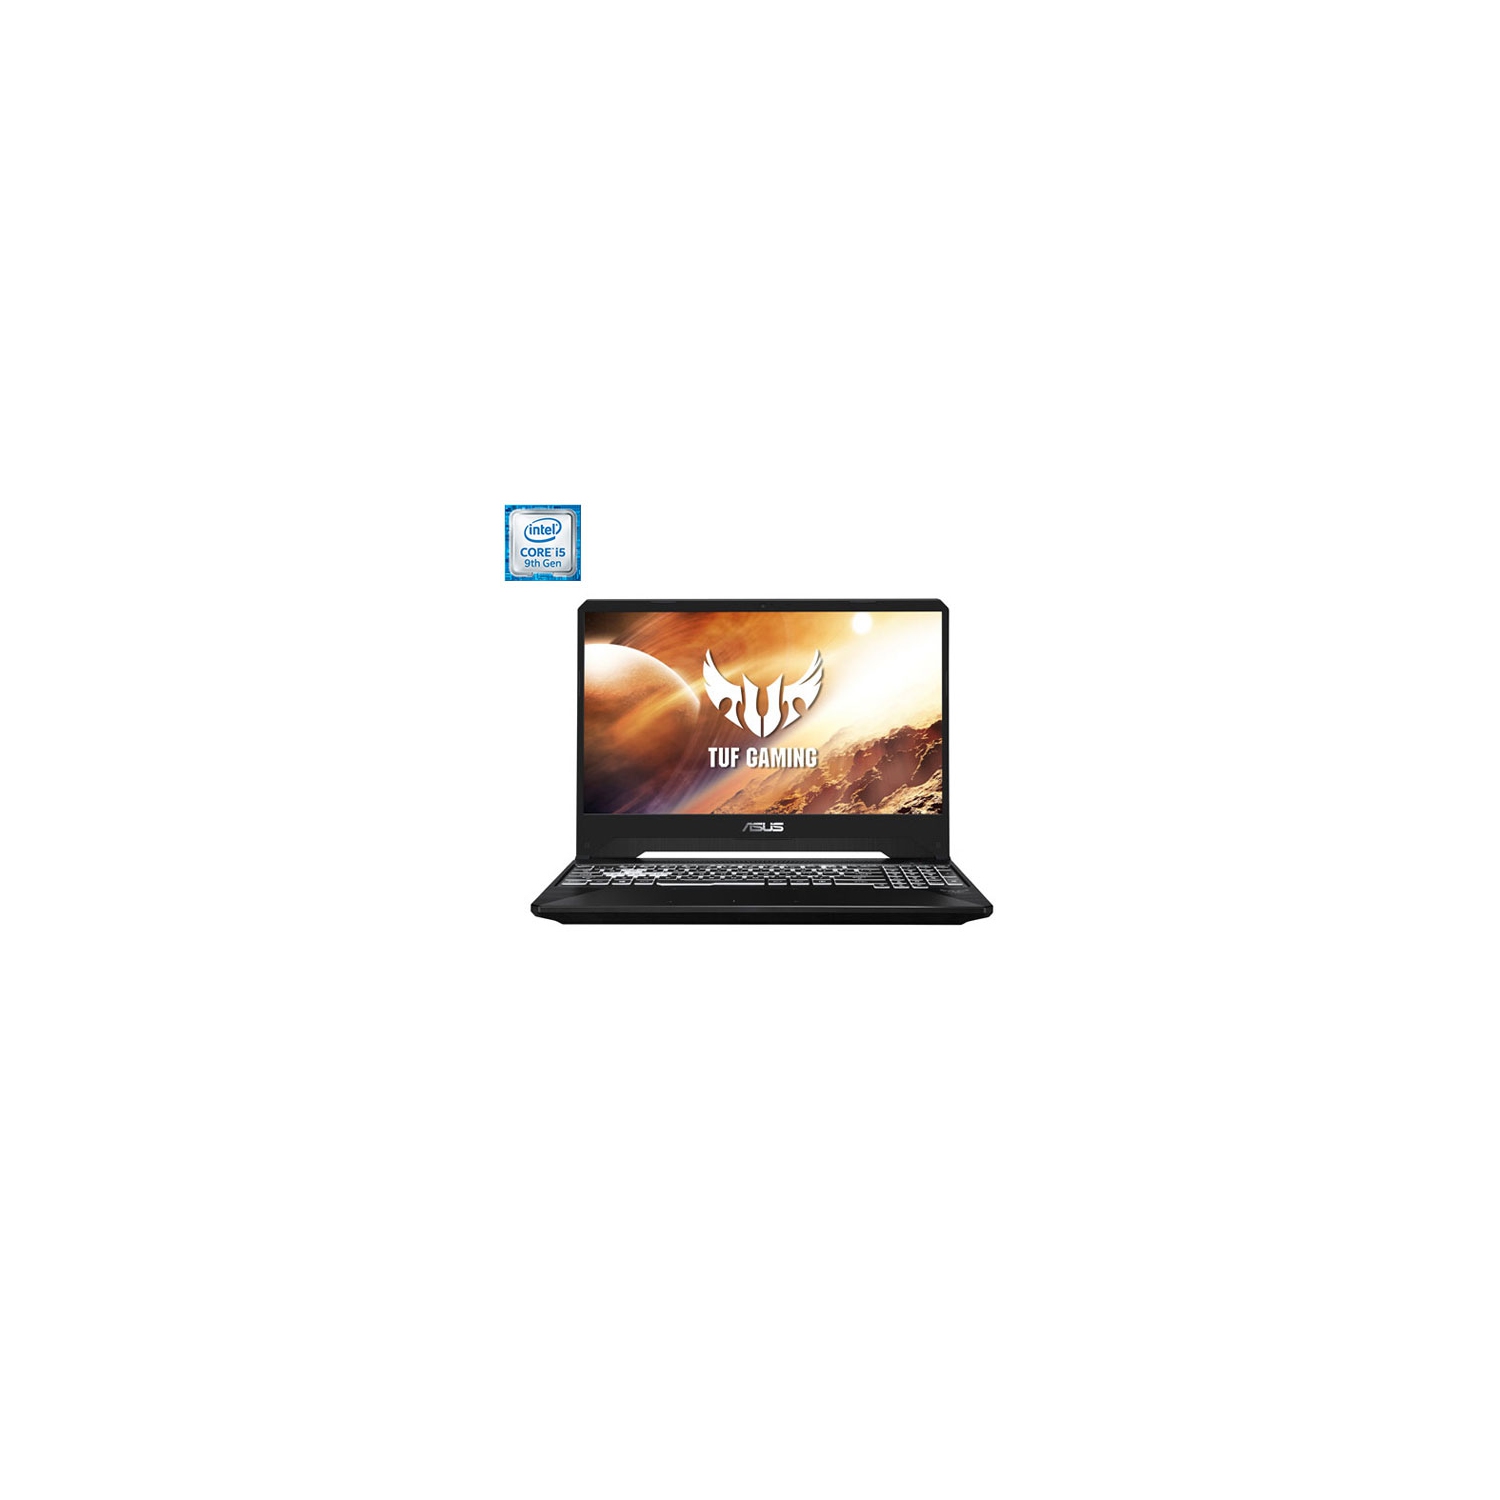 Refurbished (Excellent) - ASUS TUF 15.6 Gaming Laptop - Black (Intel Core i5-9300H/1TB HDD/8GB RAM/NVIDIA GeForce GTX 1650)